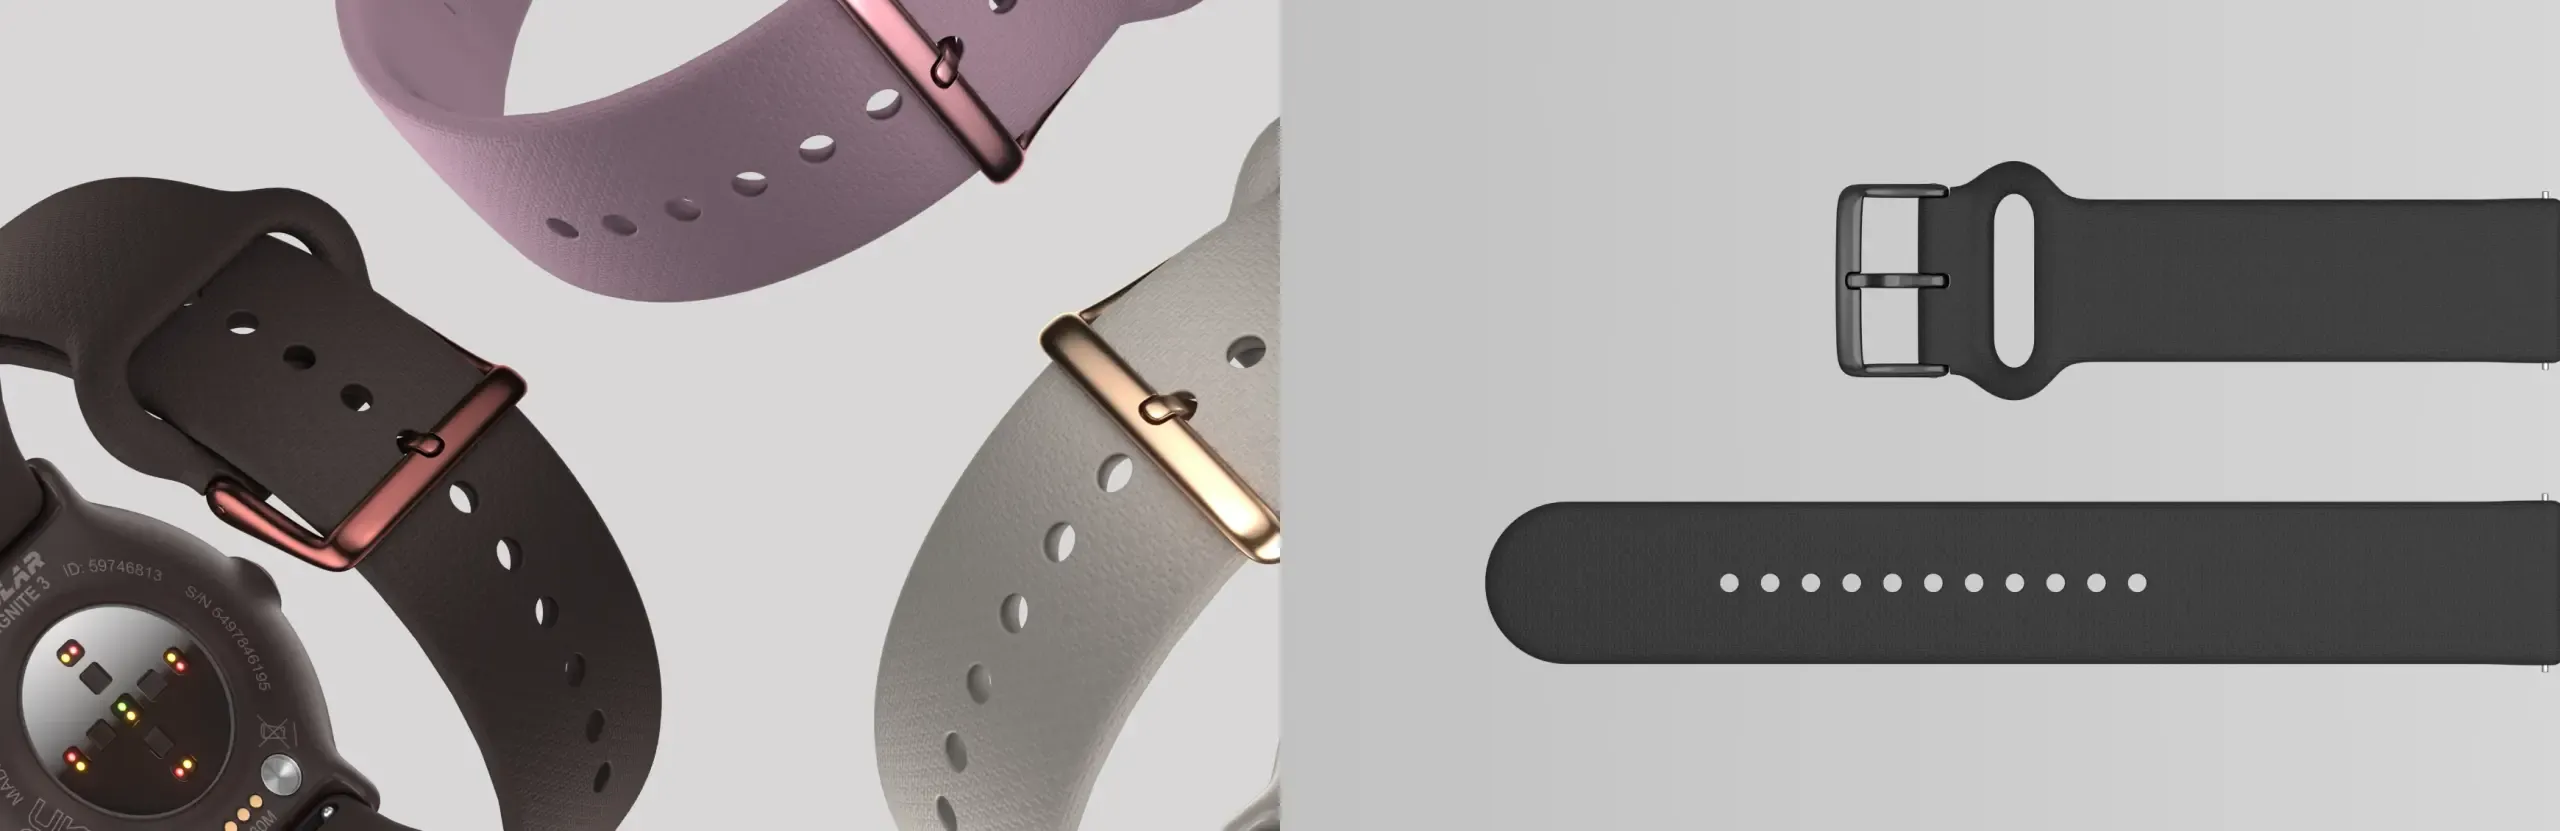 Double Color Strap For Polar Vantage V2 band Smartwatch Quick Release  Wristband For Vantage V2 Bracelet correa accessories